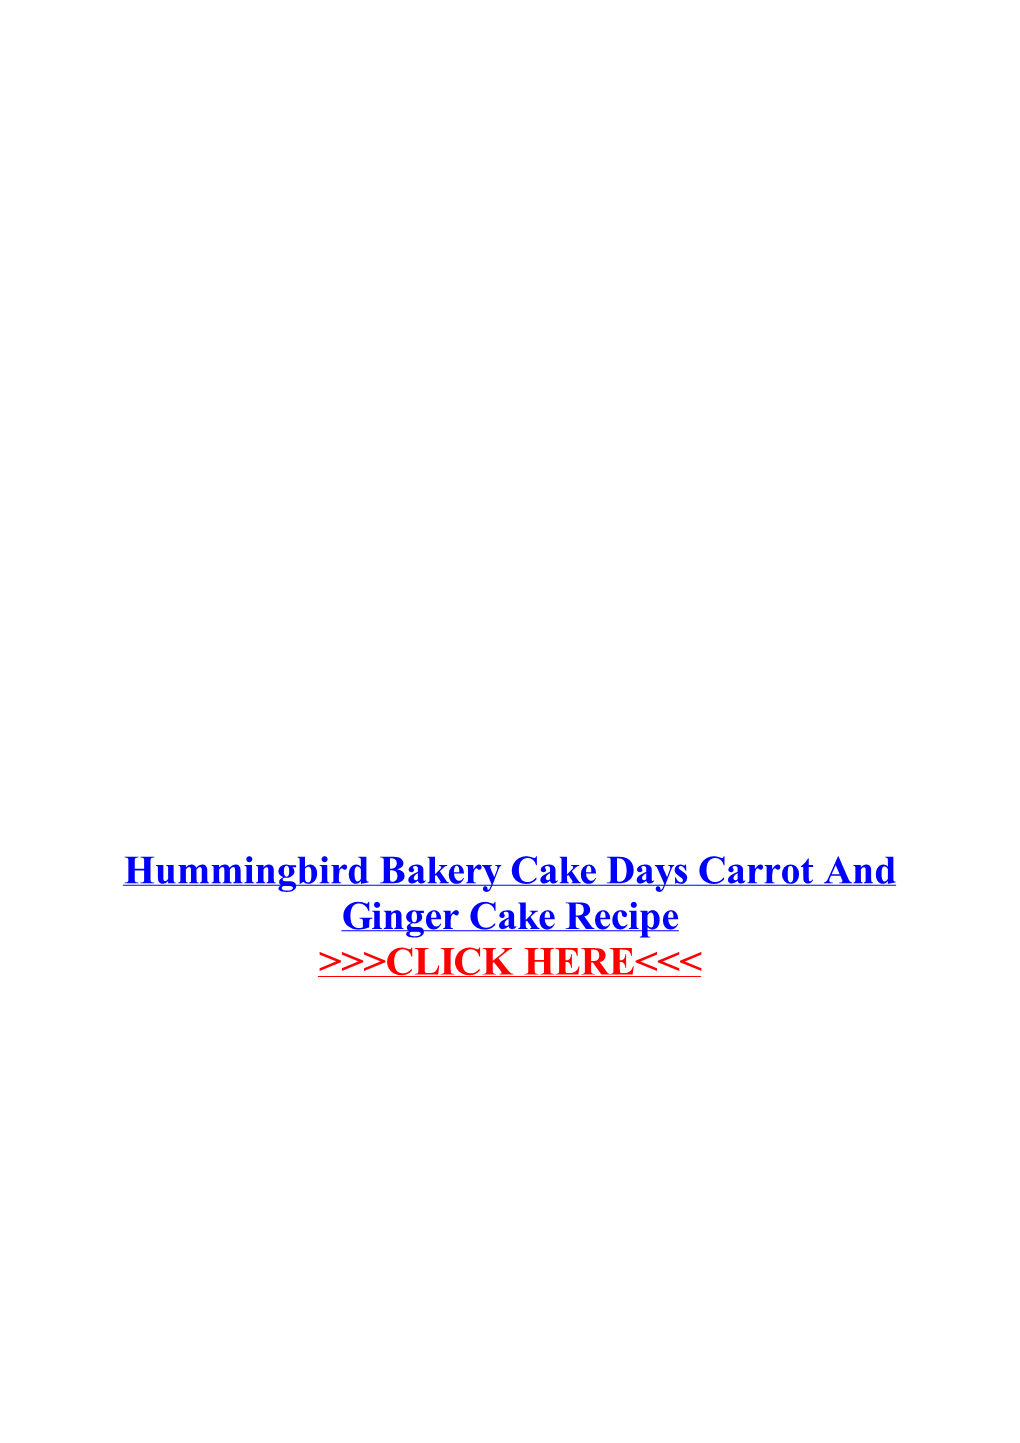 Hummingbird Bakery Cake Days Carrot and Ginger Cake Recipe